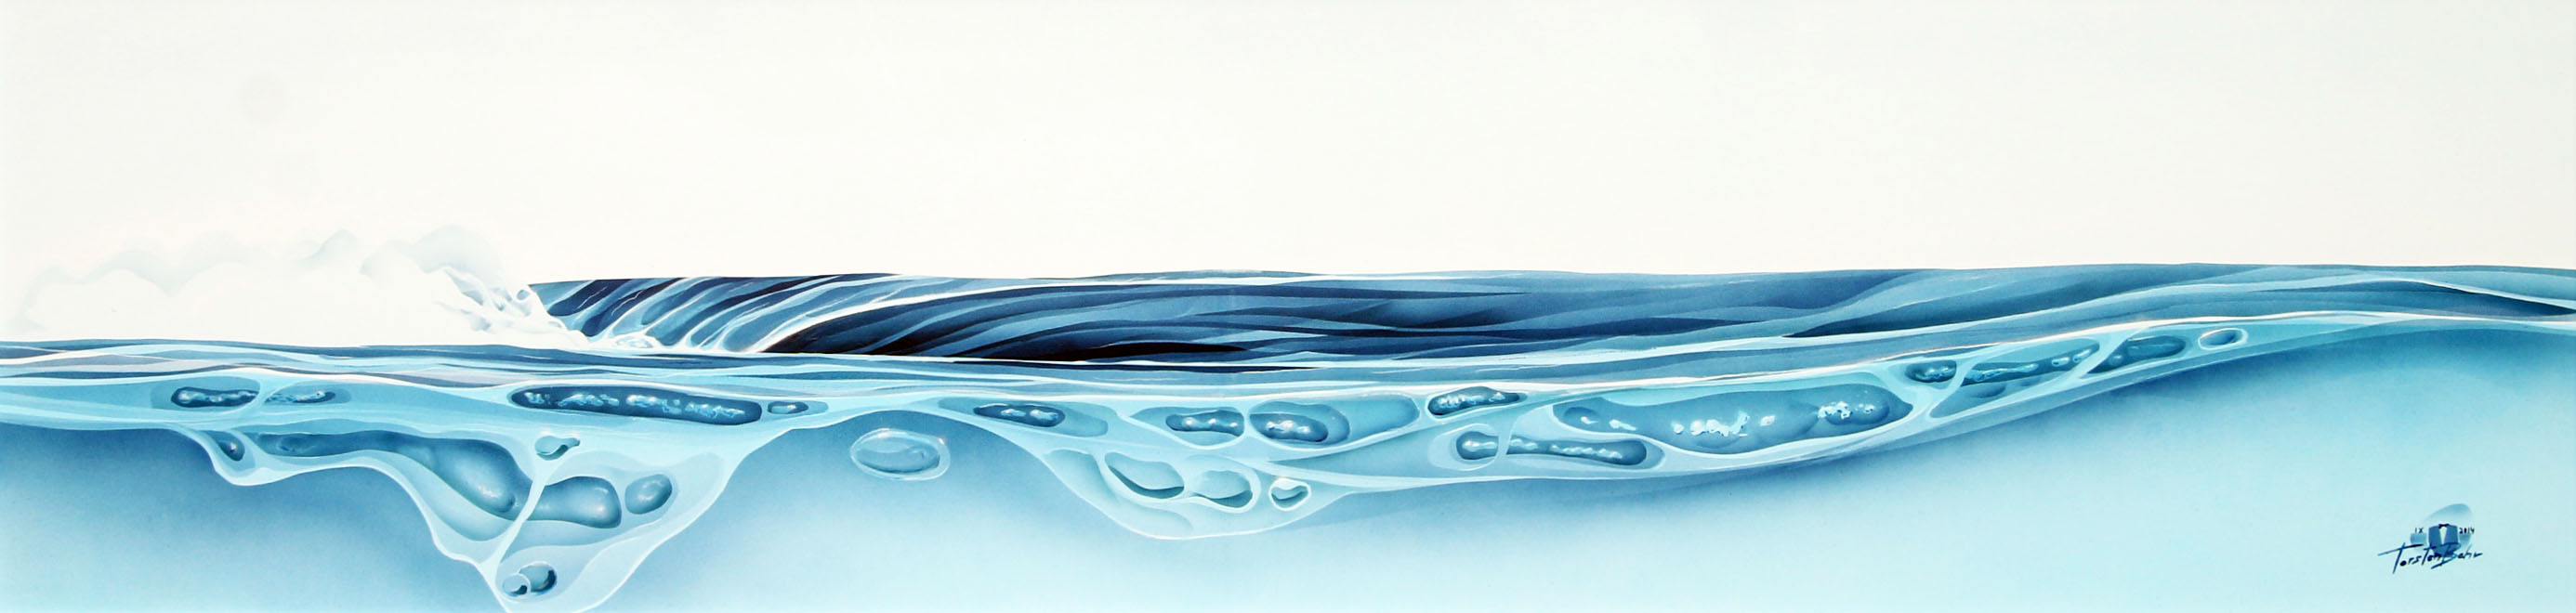 paleblue  aludibond  acrylics, spraypaint, pen  100 cm x 33 cm  2014